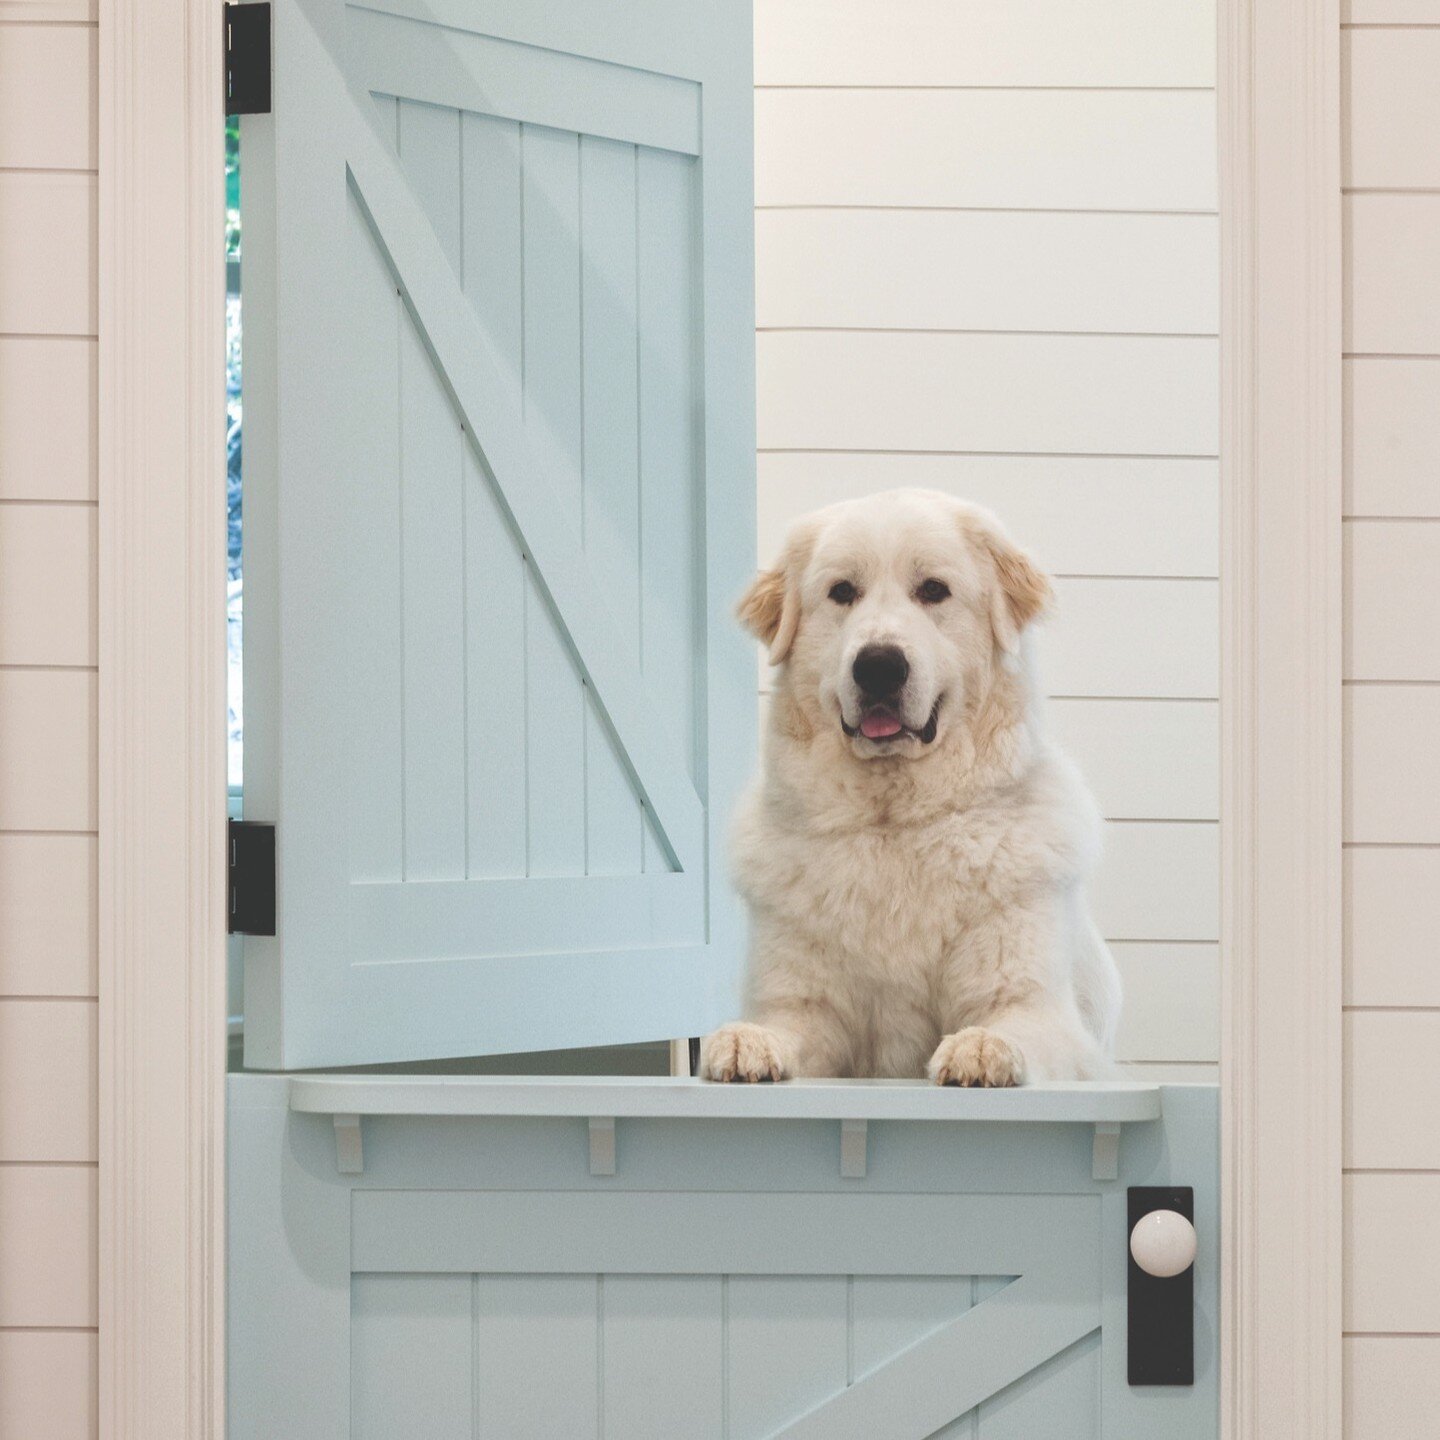 This is the best dog door I've ever seen! We love this dutch door by Trustile. 

*
*
#trustile #trustiledoors #doors #windowsanddoors #doorsandwindows #dutchdoor #homeremodel #modern #modernfarmhouse #modernfarmhousestyle #modernfarmhousedecor #desig